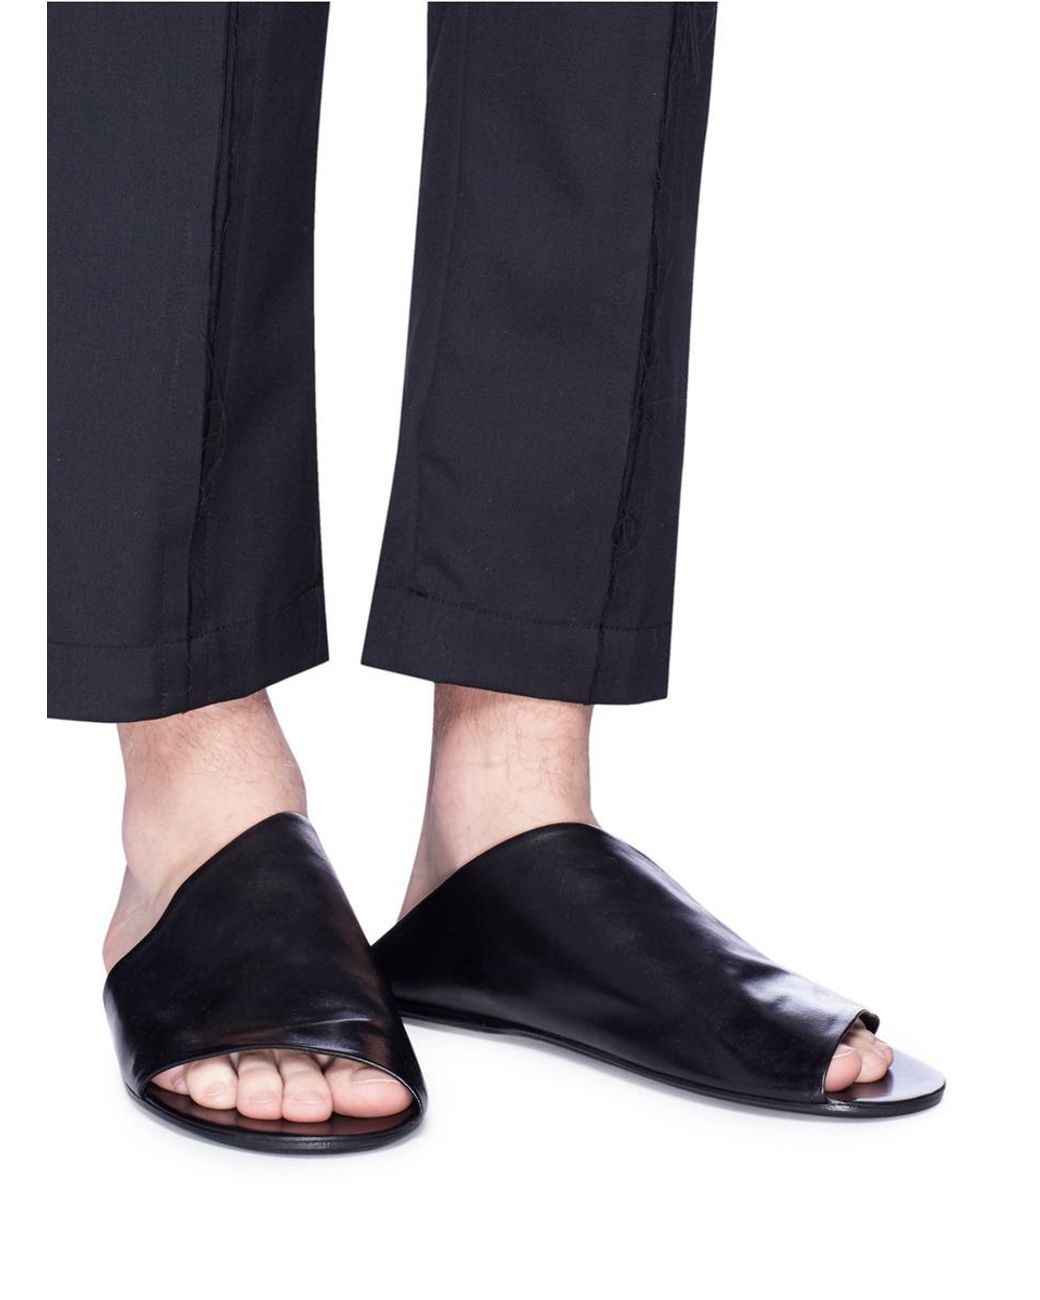 Marsèll 'arsella' Leather Slide Sandals in Black | Lyst